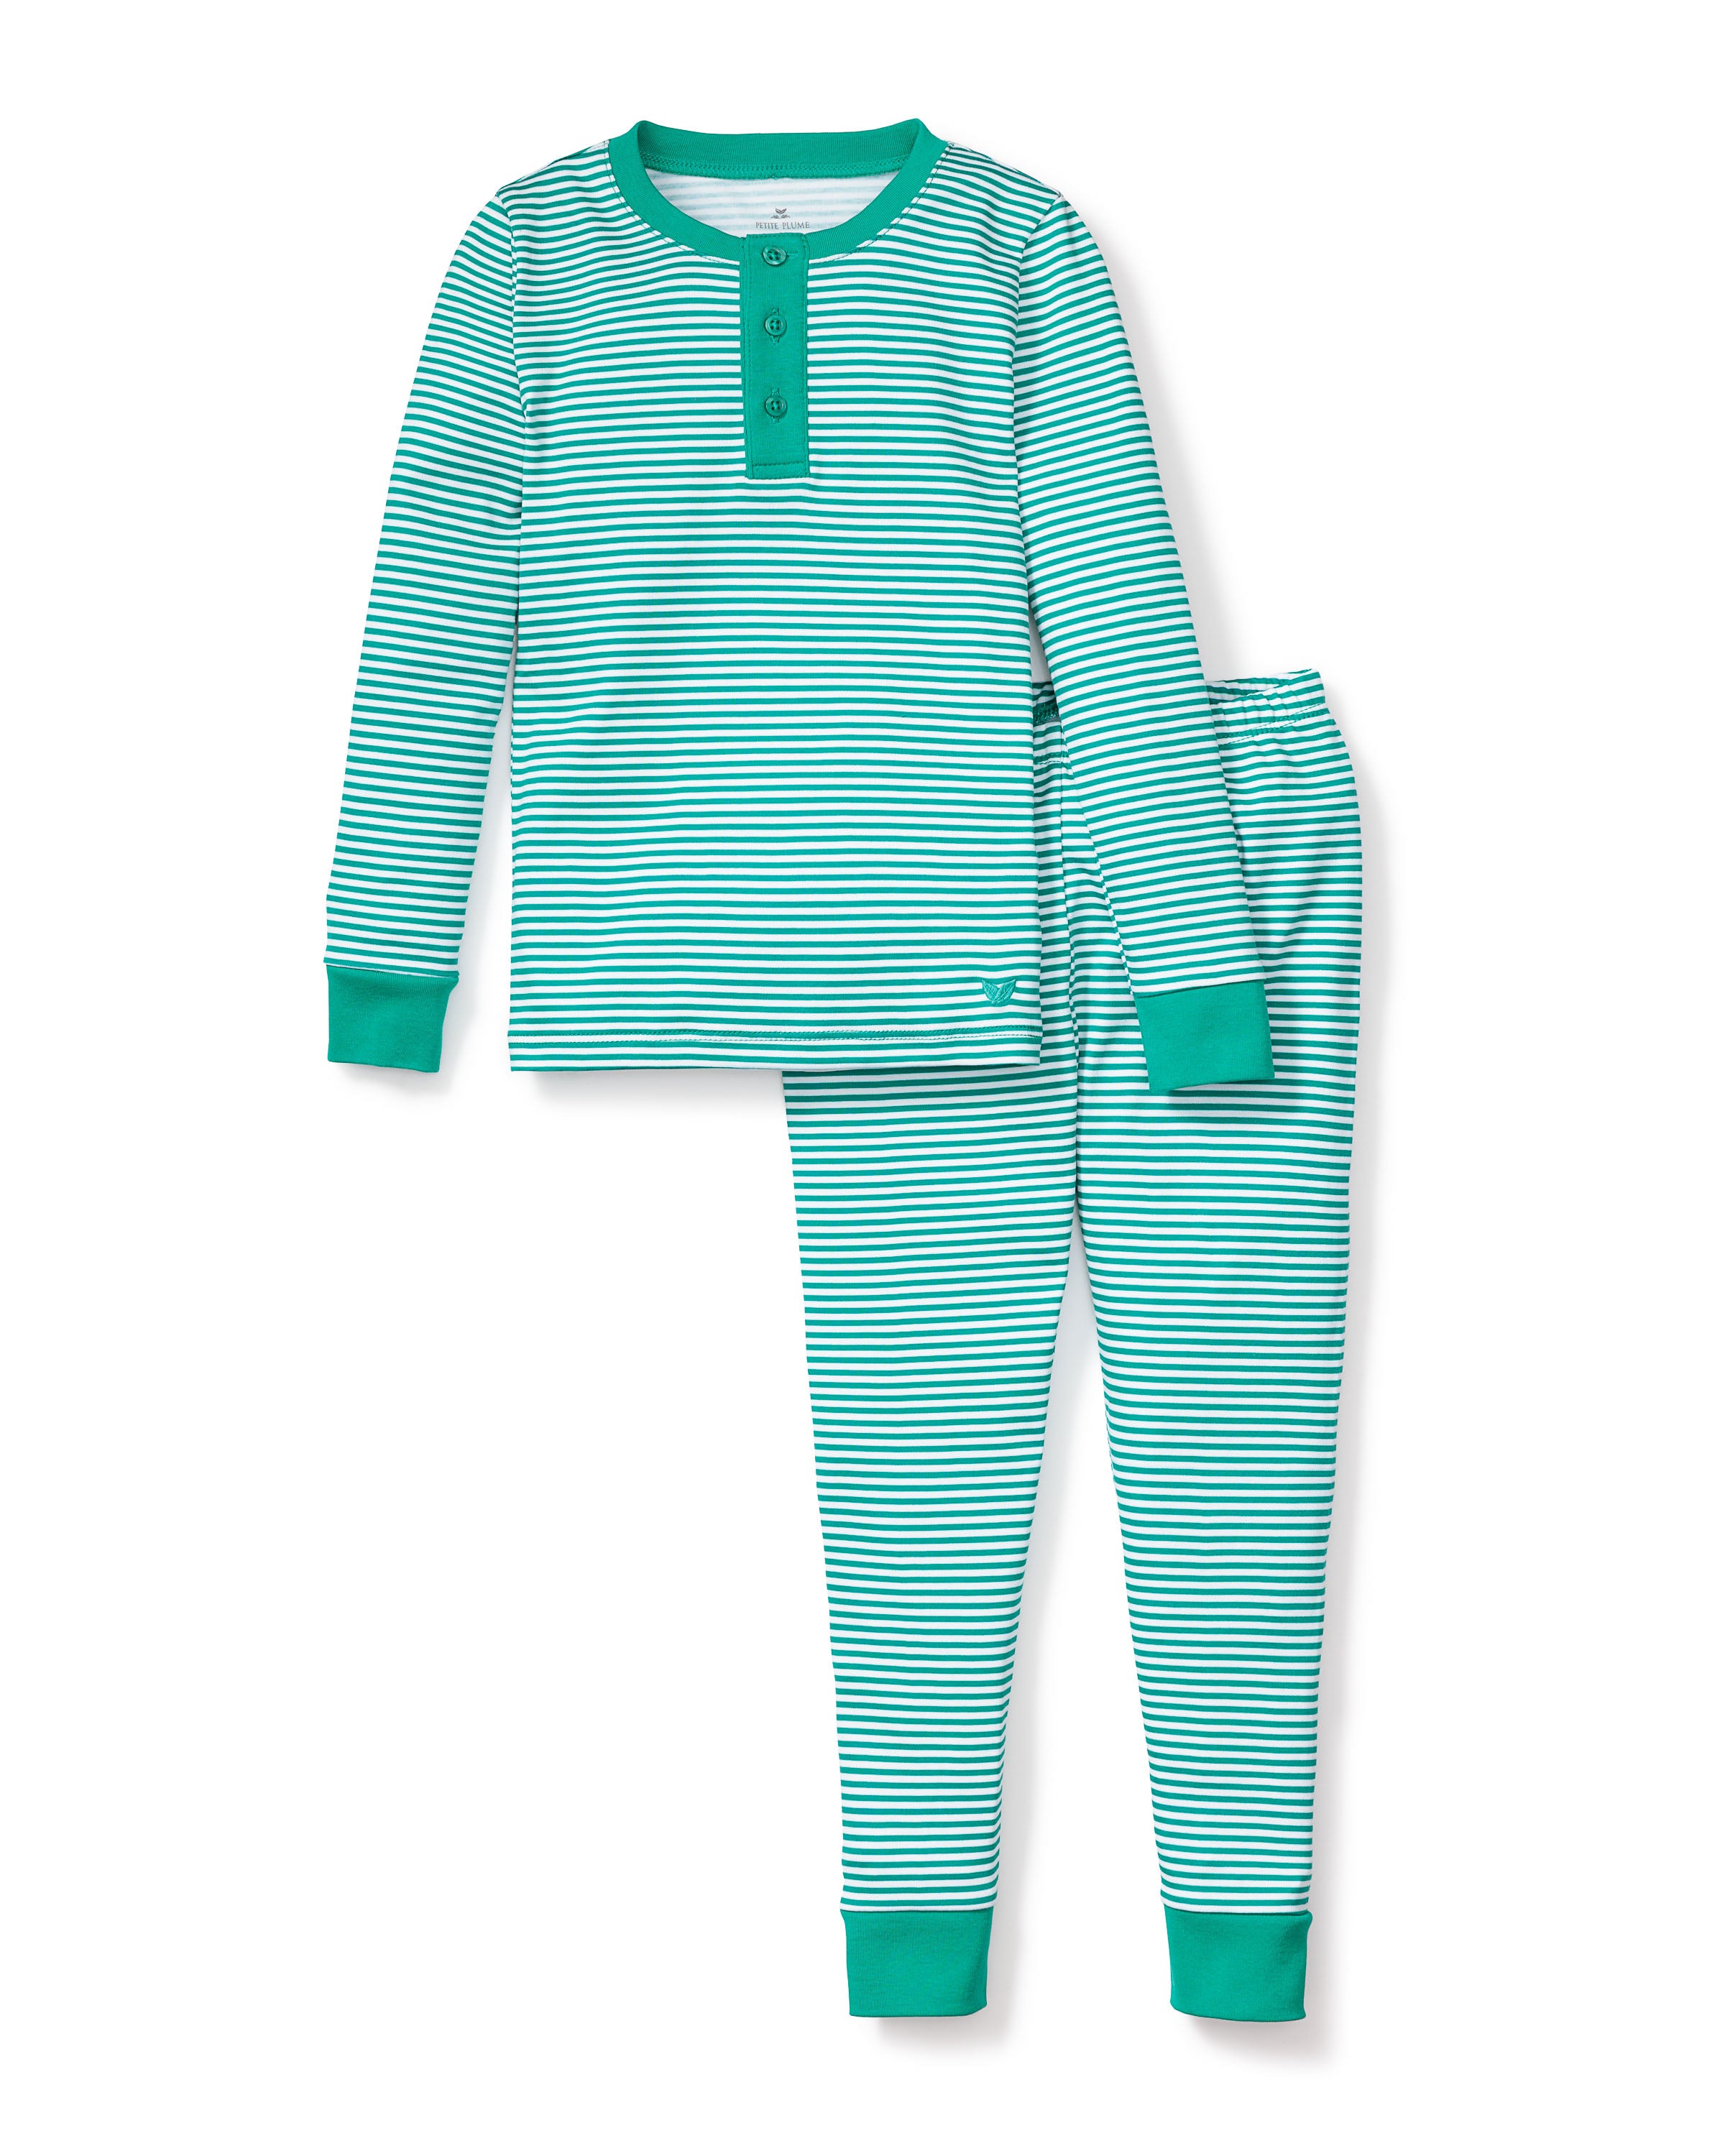 Kid's Pima Snug Fit Pajama Set in Green Stripe